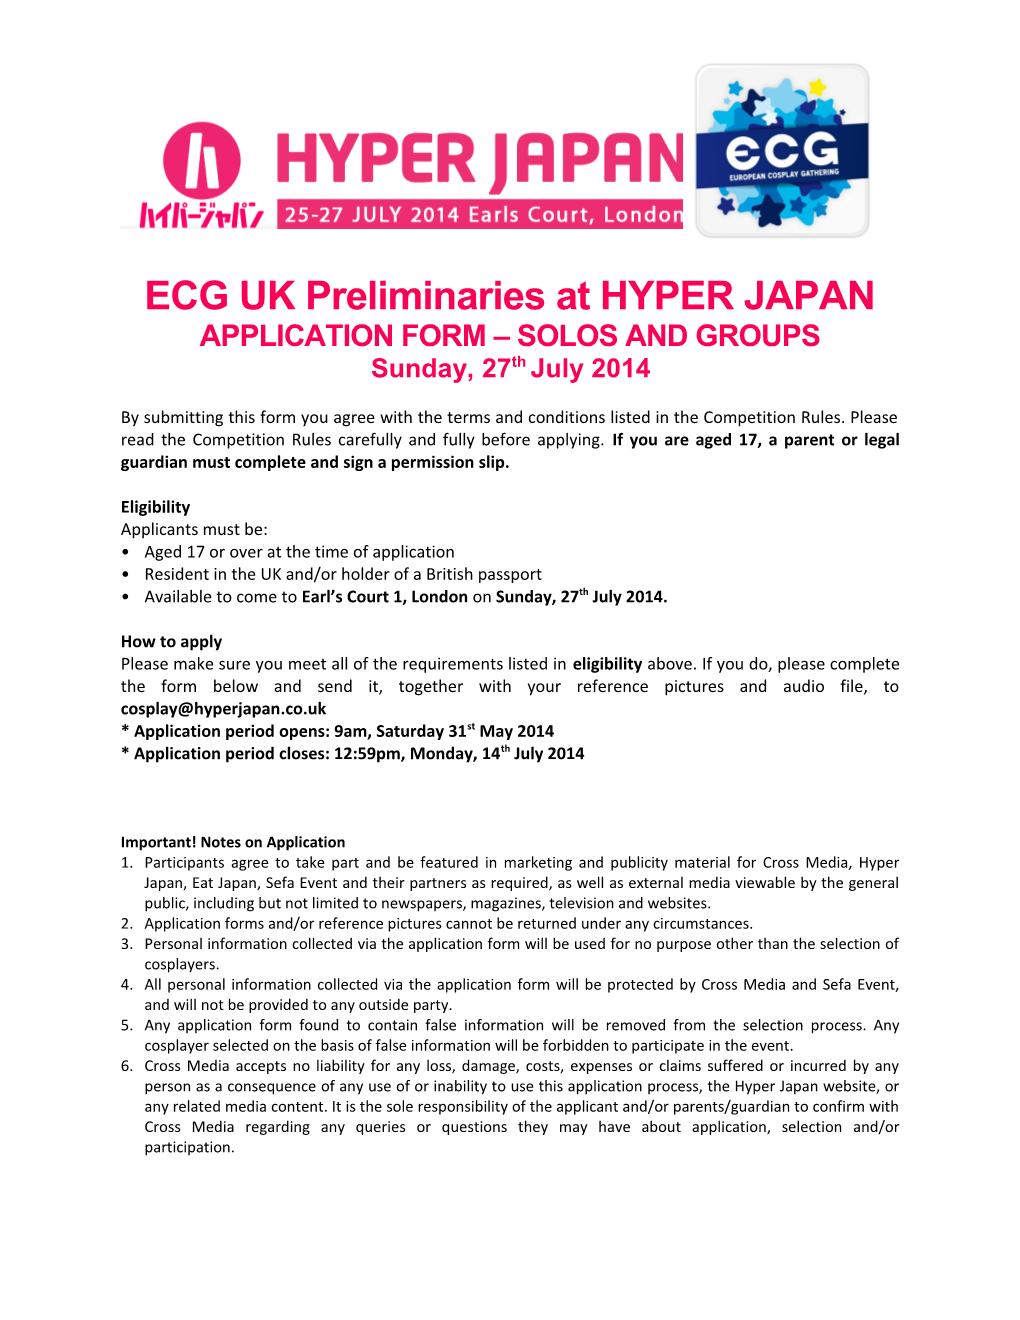 ECG UK Preliminaries at HYPER JAPAN APPLICATION FORM SOLOS and GROUPS